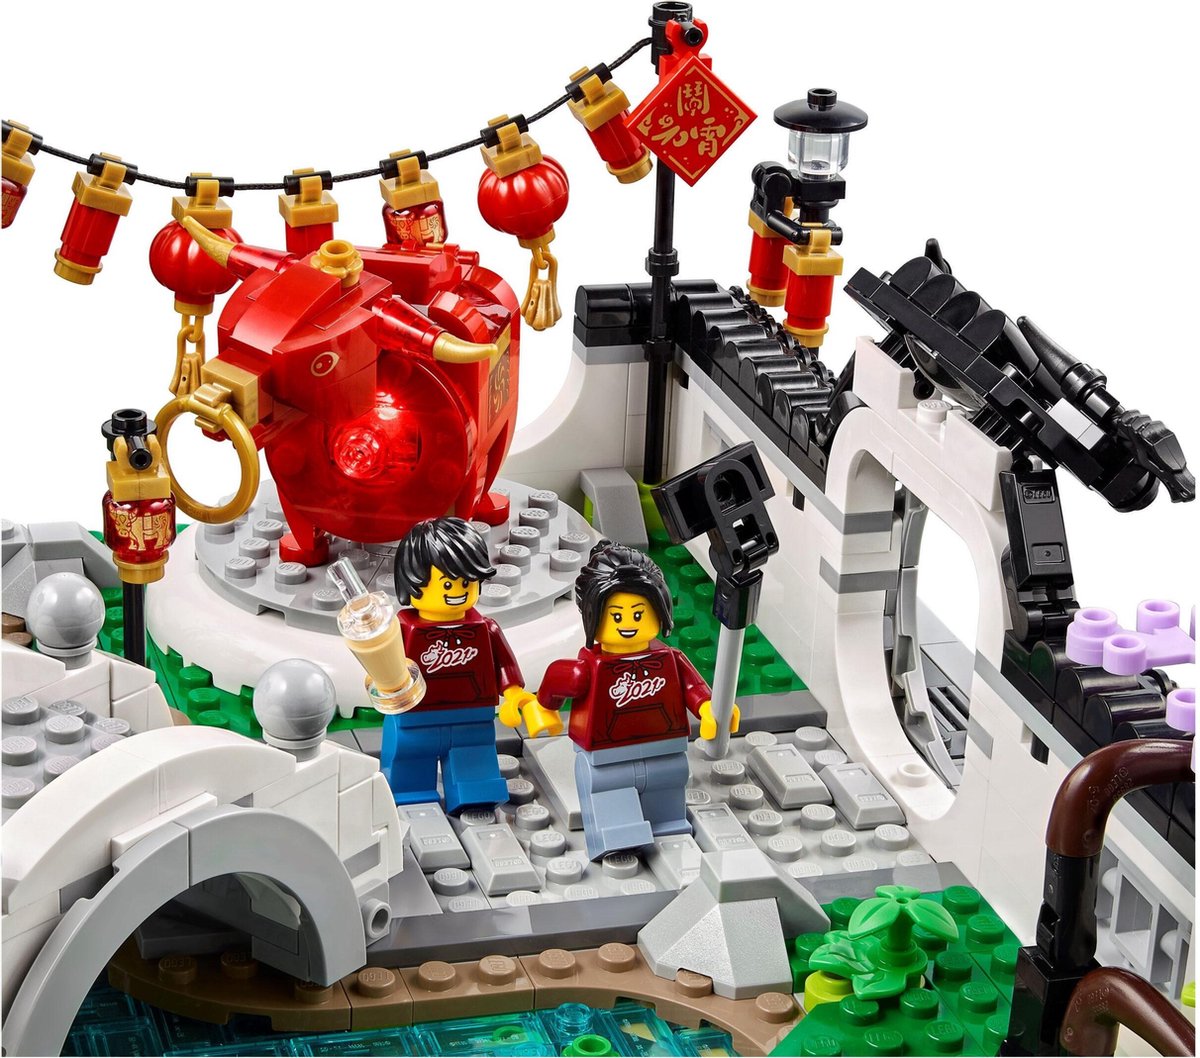 LEGO 80107 Spring Lantern Festival fête des lanternes nouvel an chinois